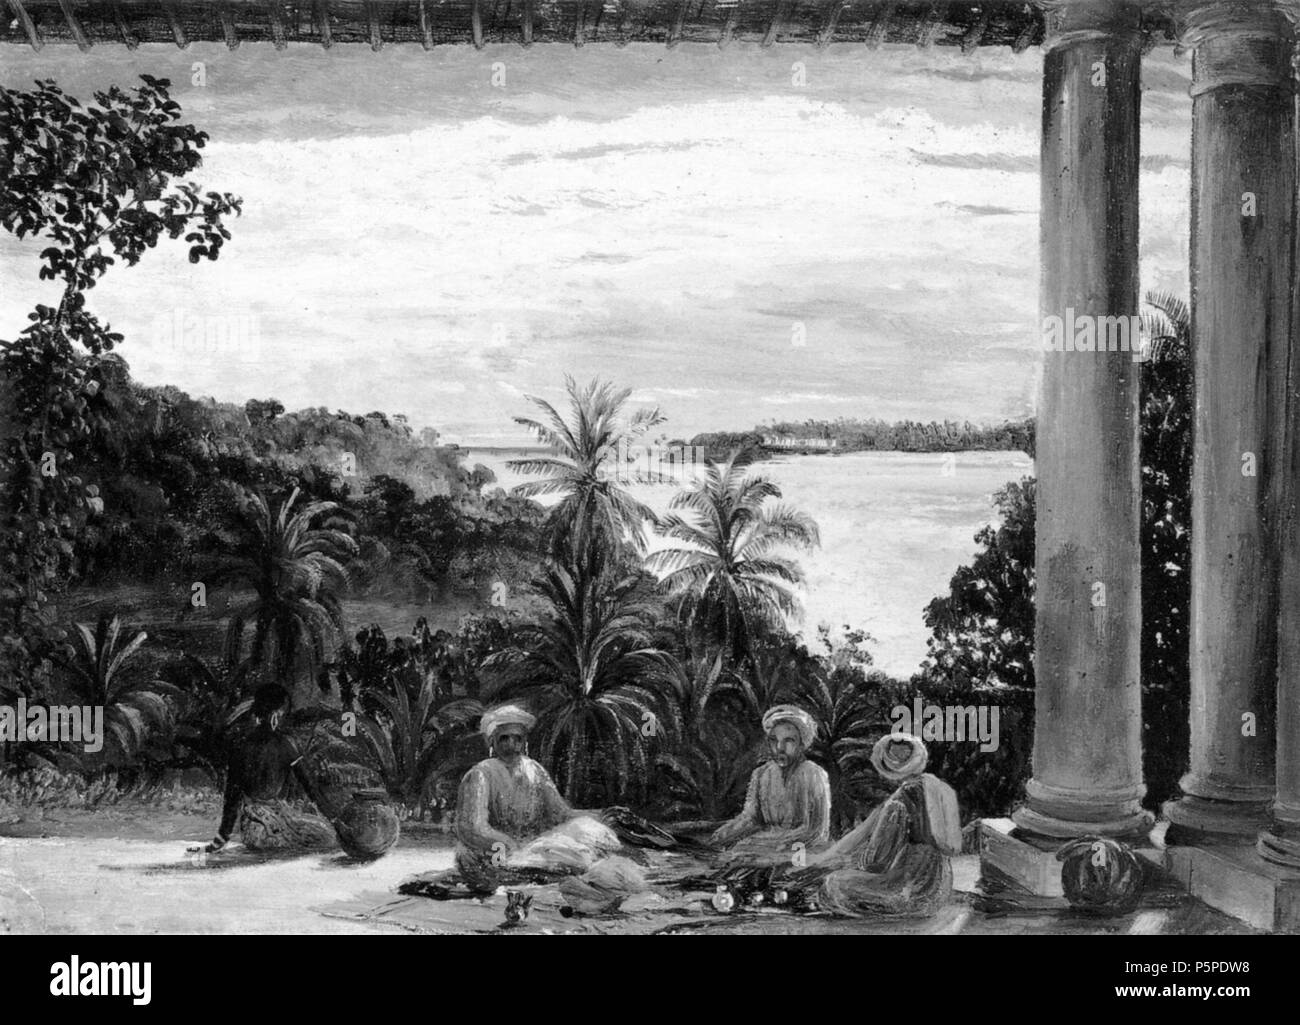 N/A. Bombay Pedlars on Mrs Cameron's Verandah, Kalutara. Oil on paperboard, 240 x 345mm (9 1/2 x 13 5/8'). January 1877. Marianne North 219 Bombay Pedlars on Mrs Cameron's Verandah, by Marianne North Stock Photo